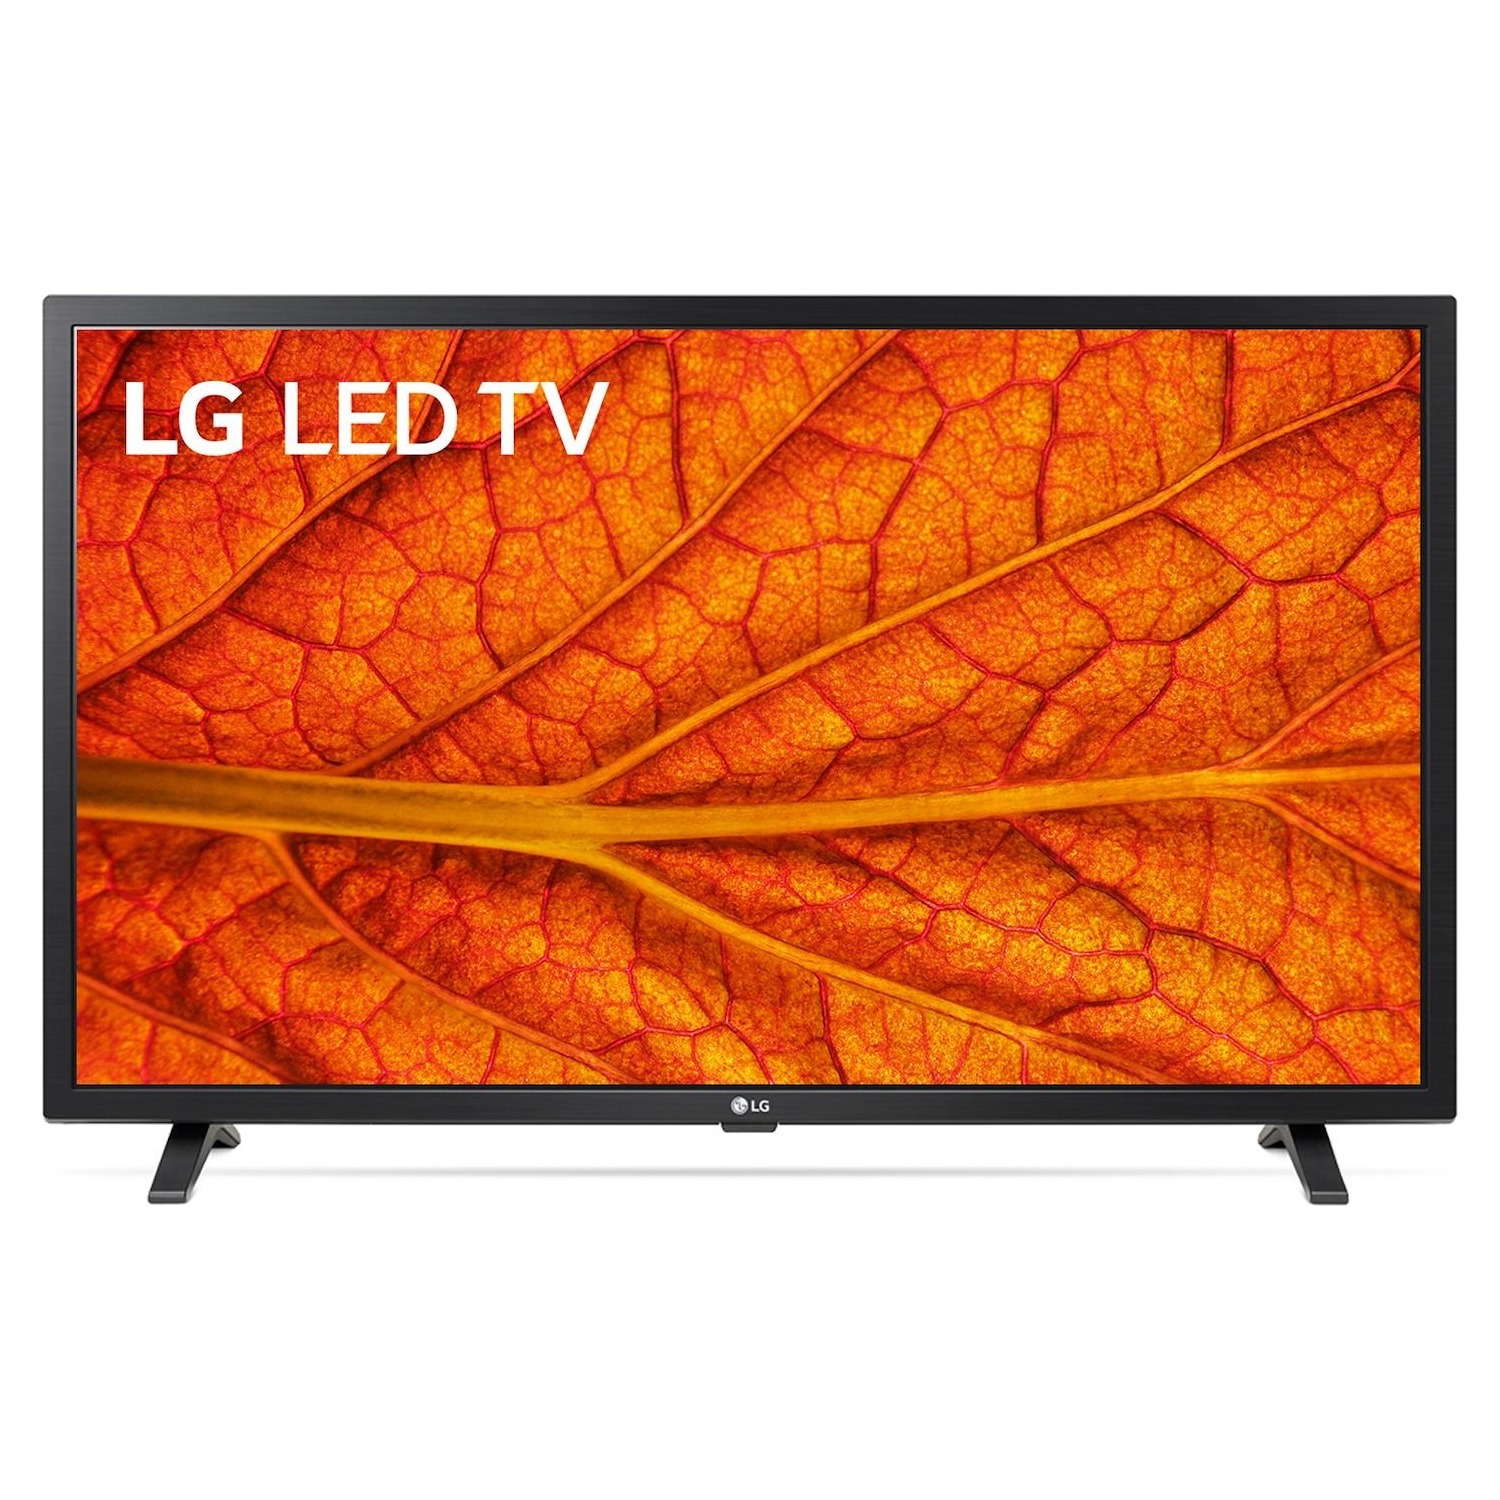 Immagine per TV LED Smart LG 32LM6370P da DIMOStore